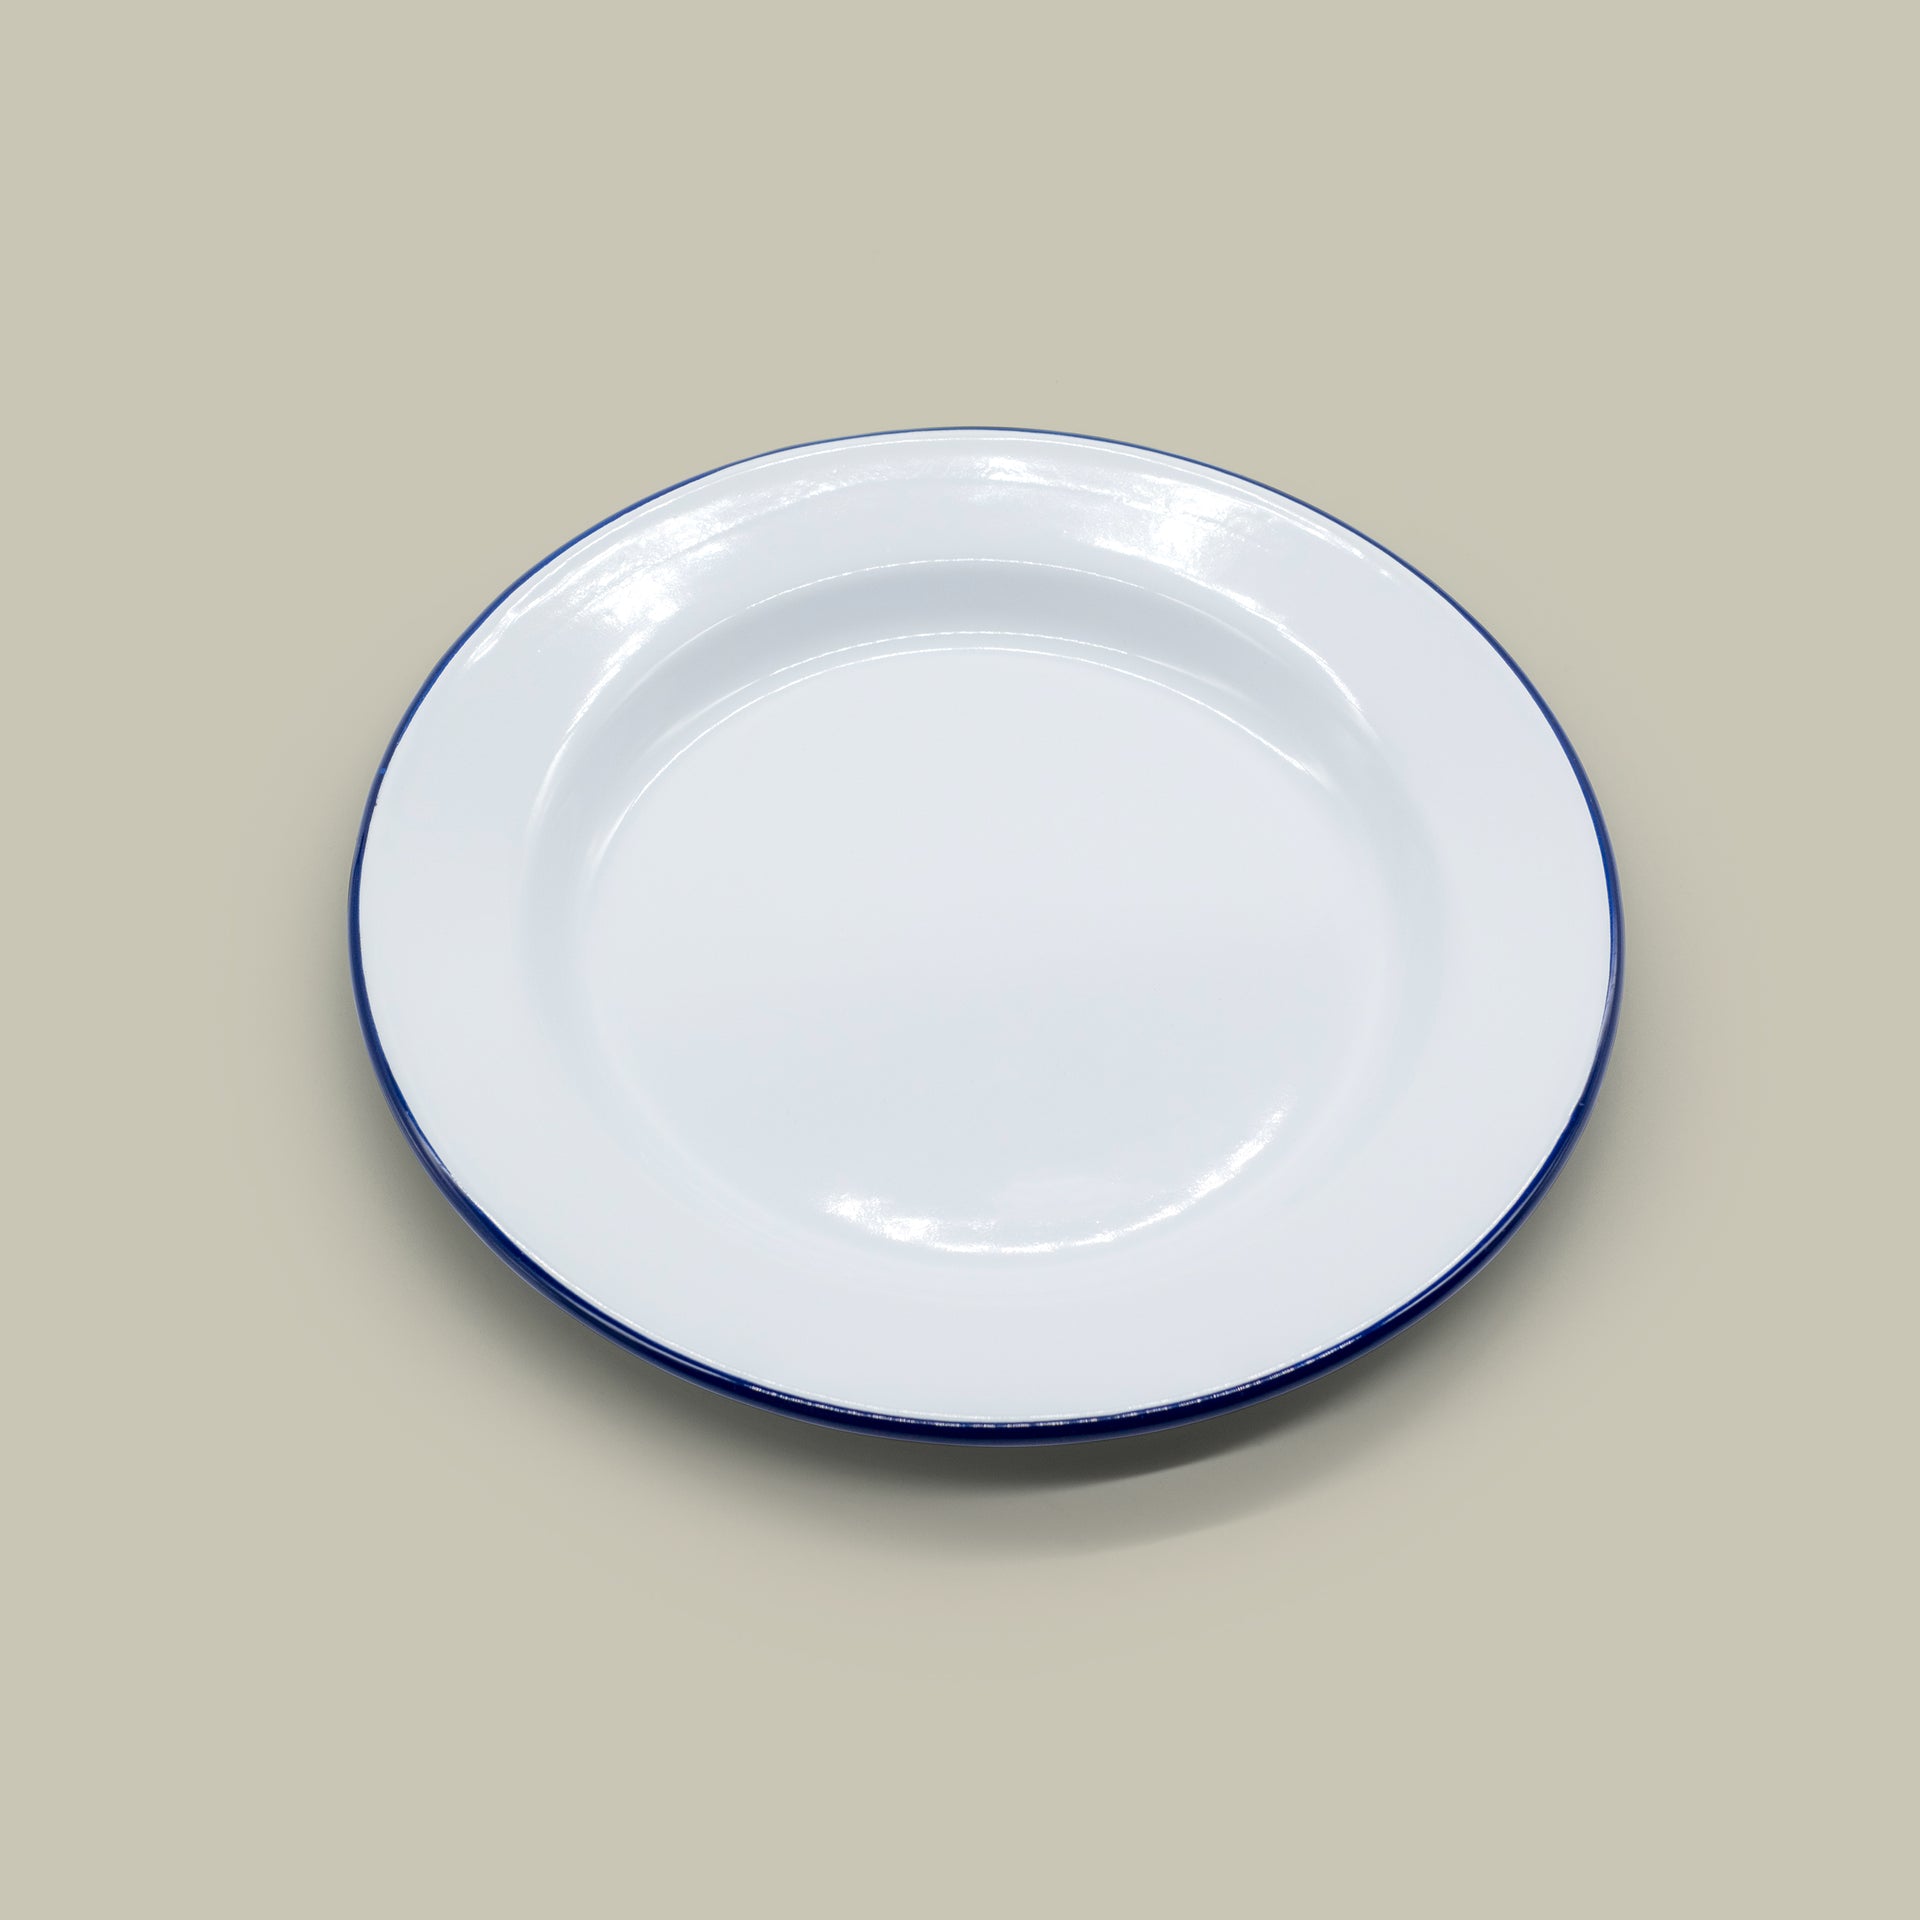 falcon 24cm plates - White with Blue rim